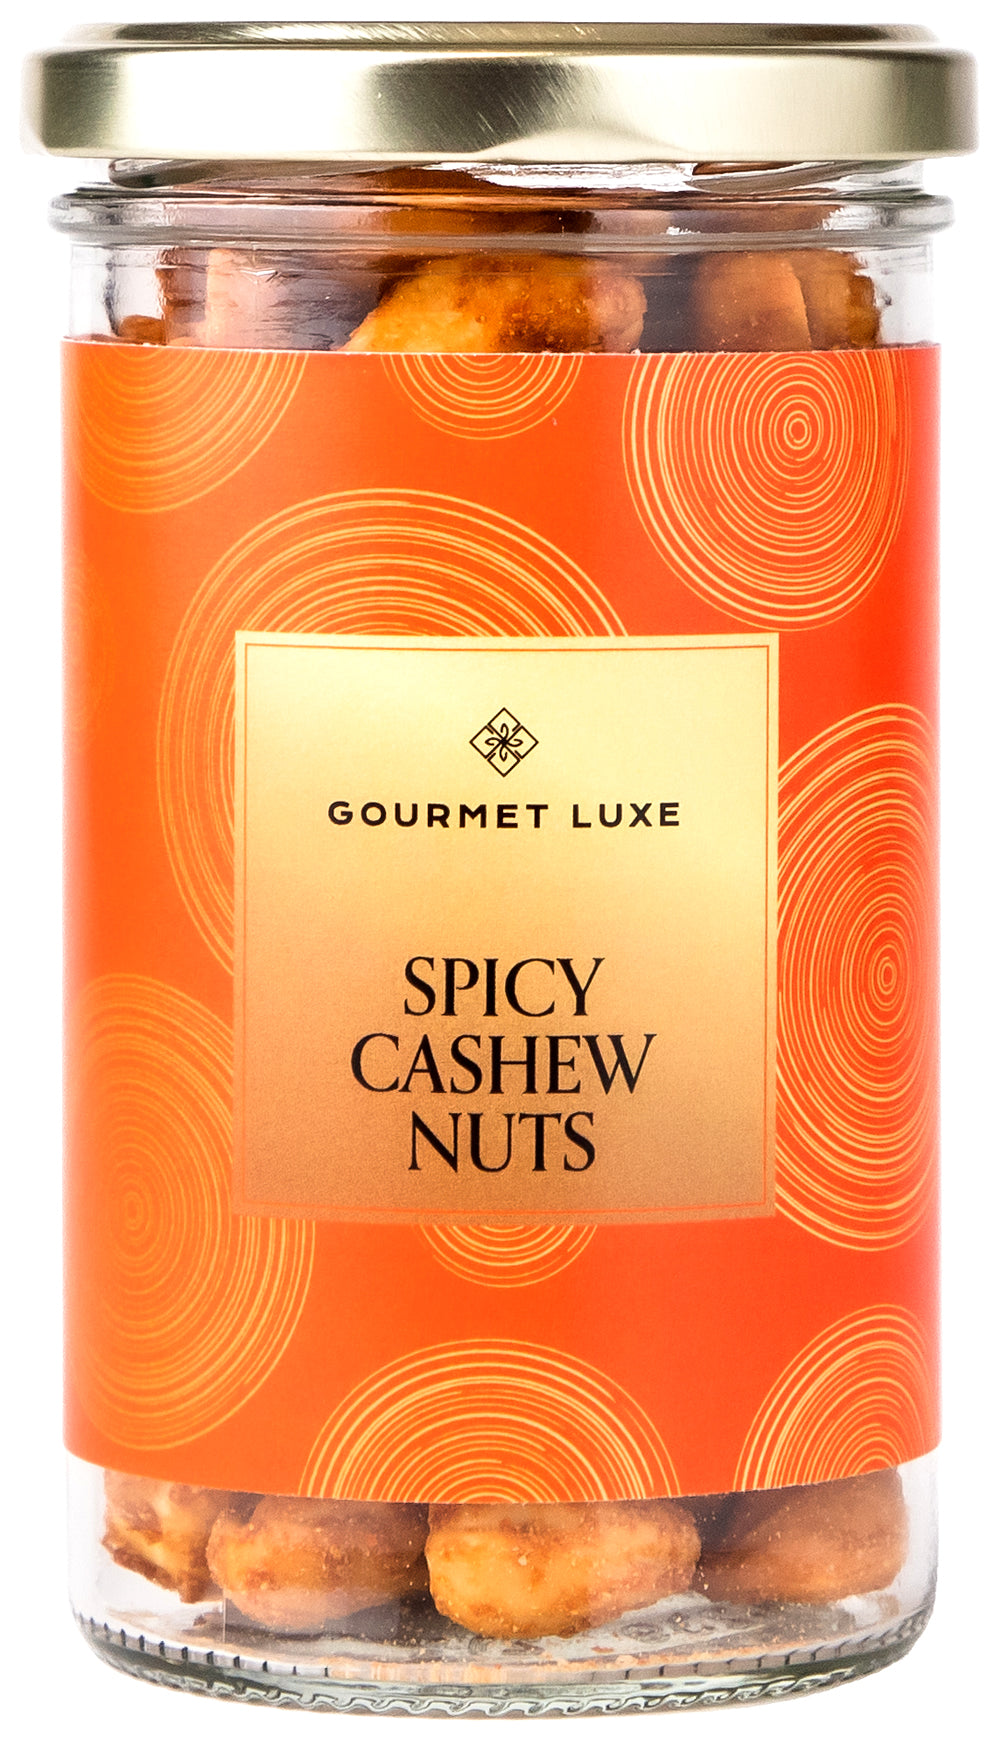 Spicy Cashew Nuts